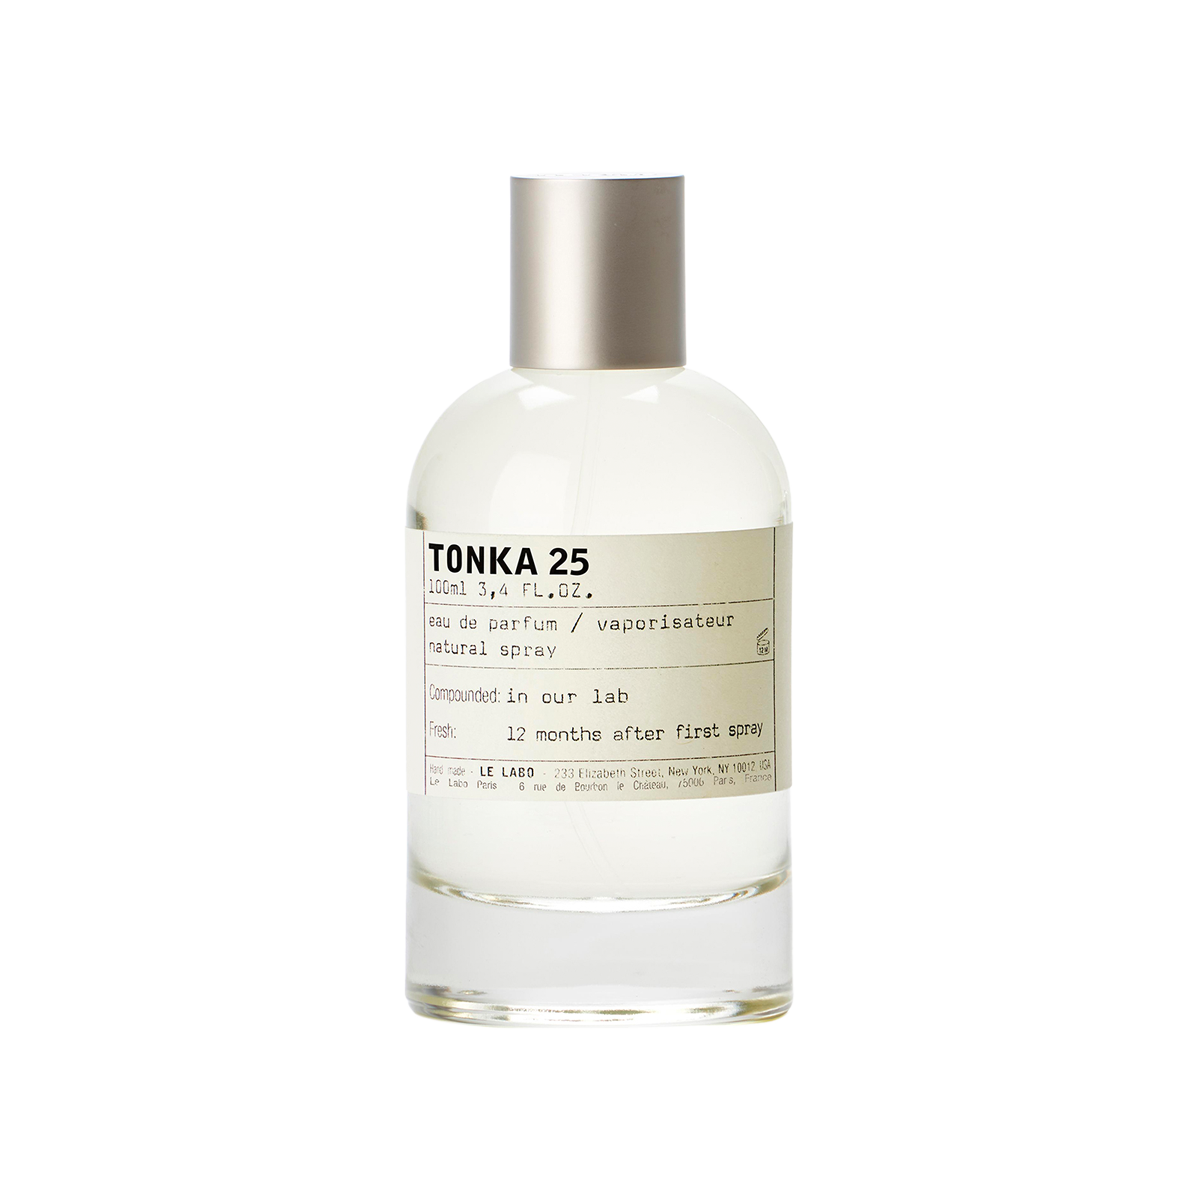 Le Labo fragrances - Tonka 25 Eau de Parfum